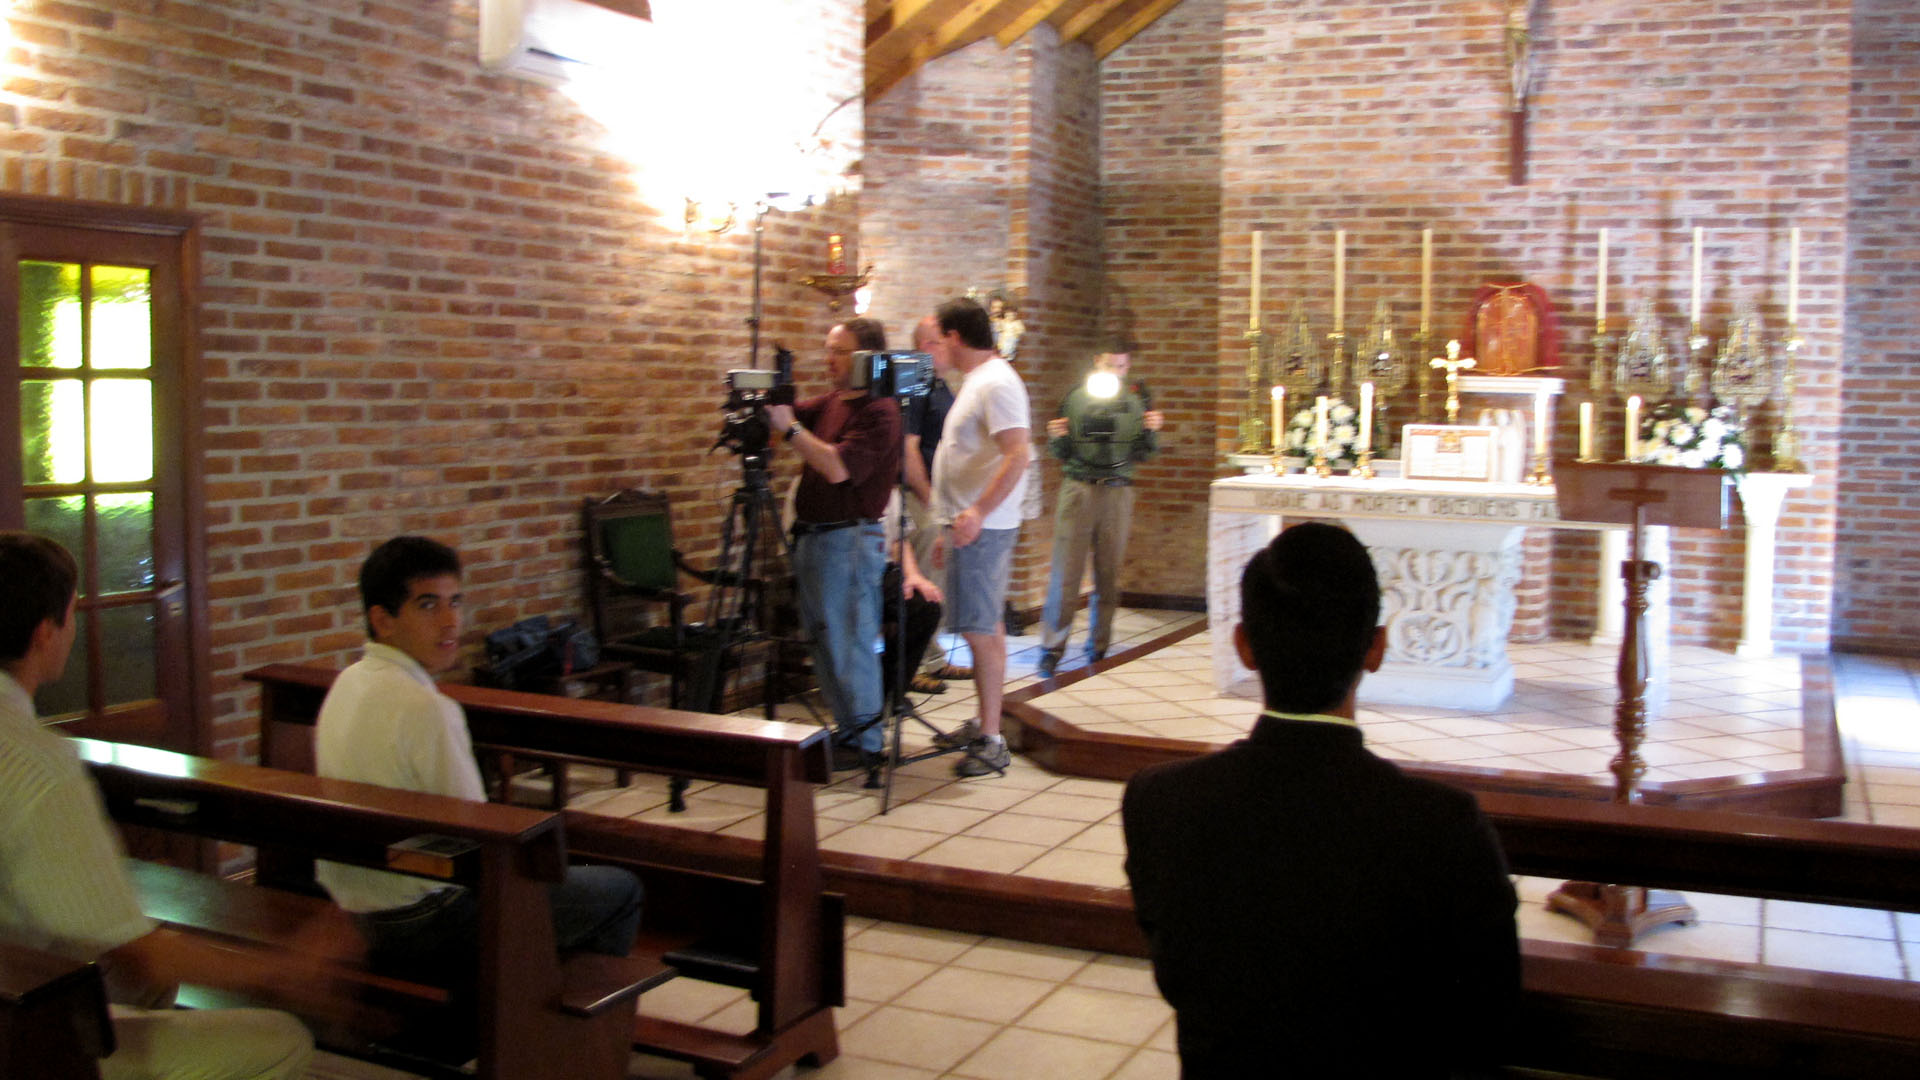 filming in chapel.jpg